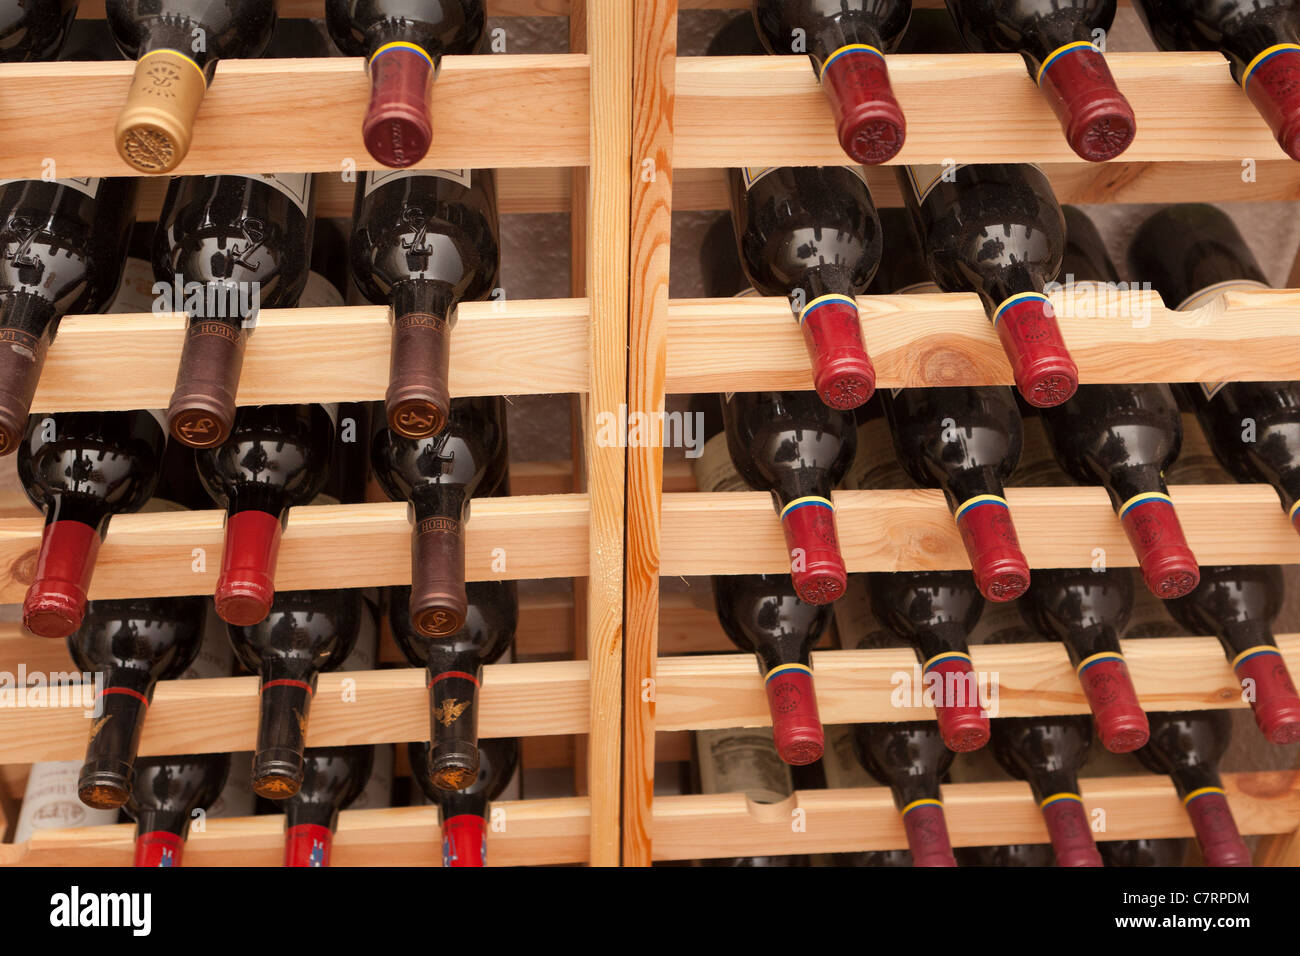 Wine bottles in a wine cellar Stock Photo